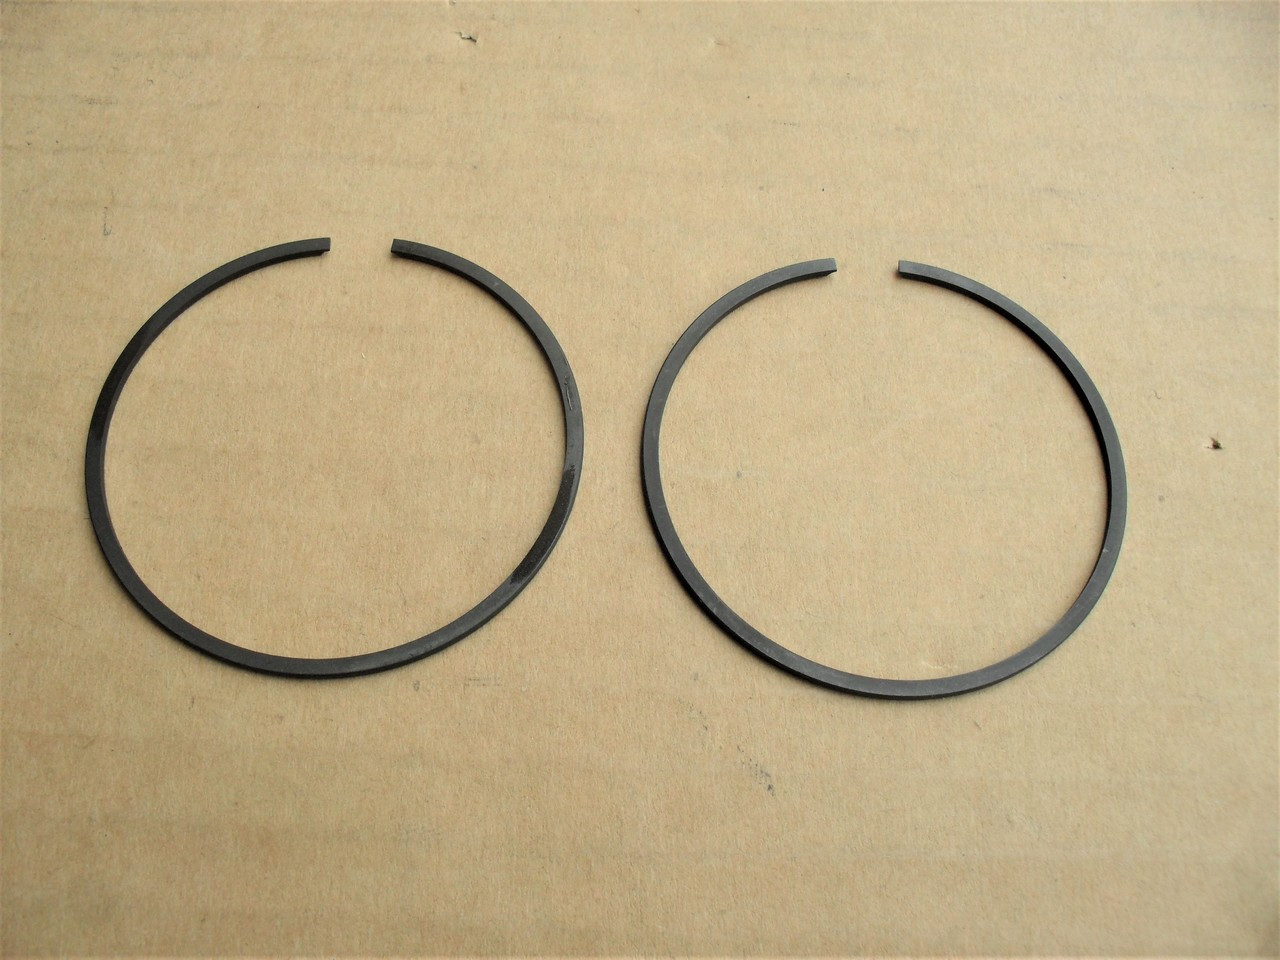 Piston Rings for Husqvarna 570, 575 XP, 579 XP chainsaw, K750, K760 cutoff saw 503289047, 522990101